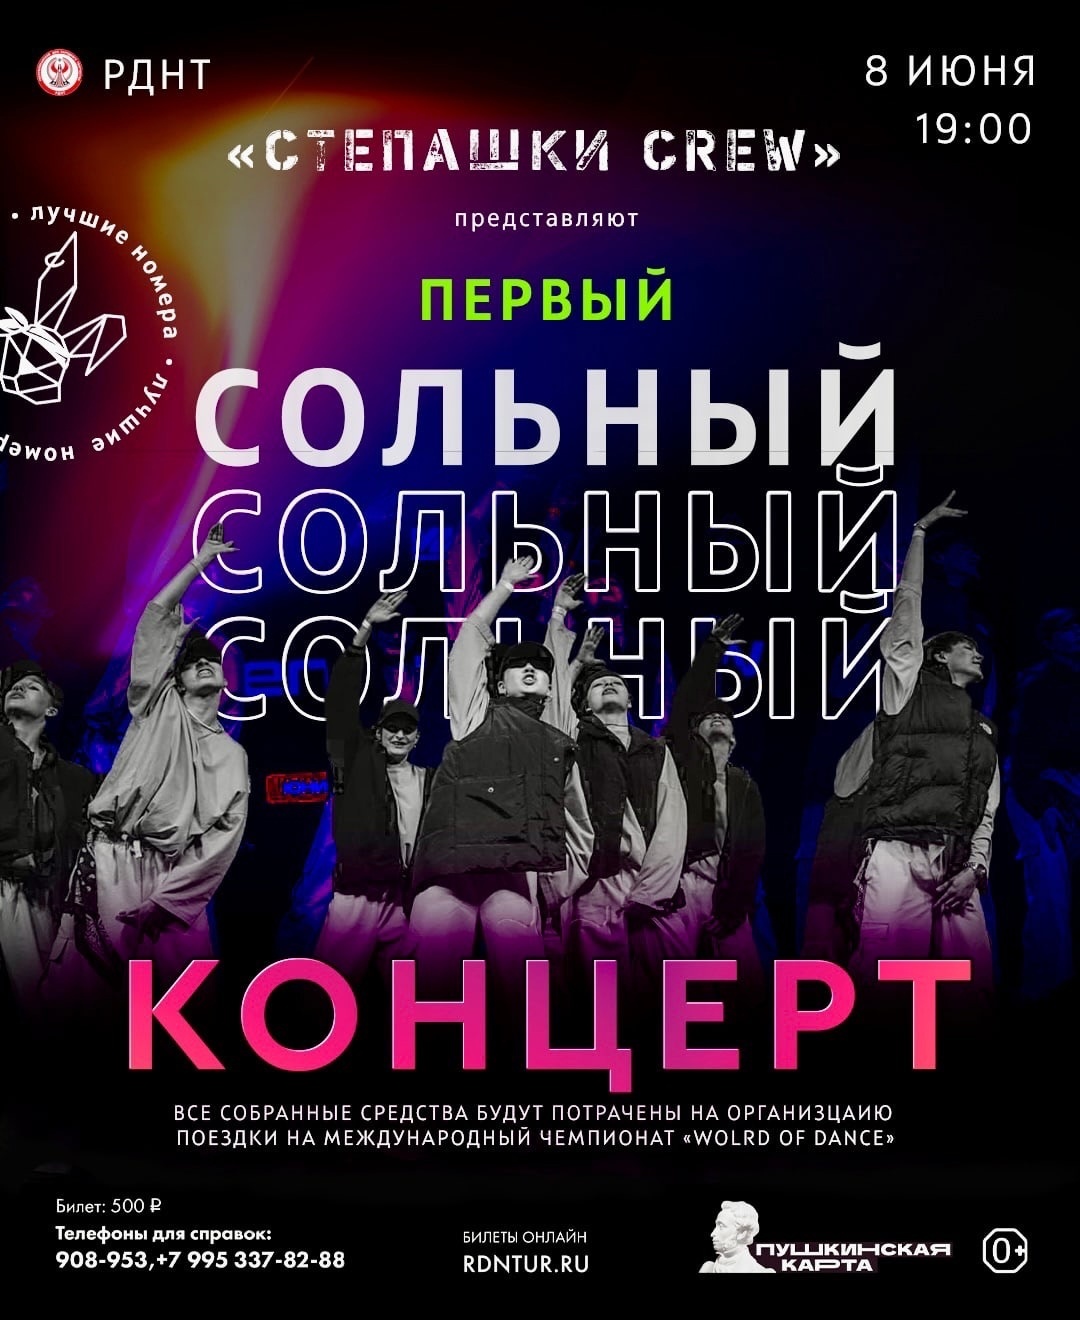 Концерт команды «Степашки crew»